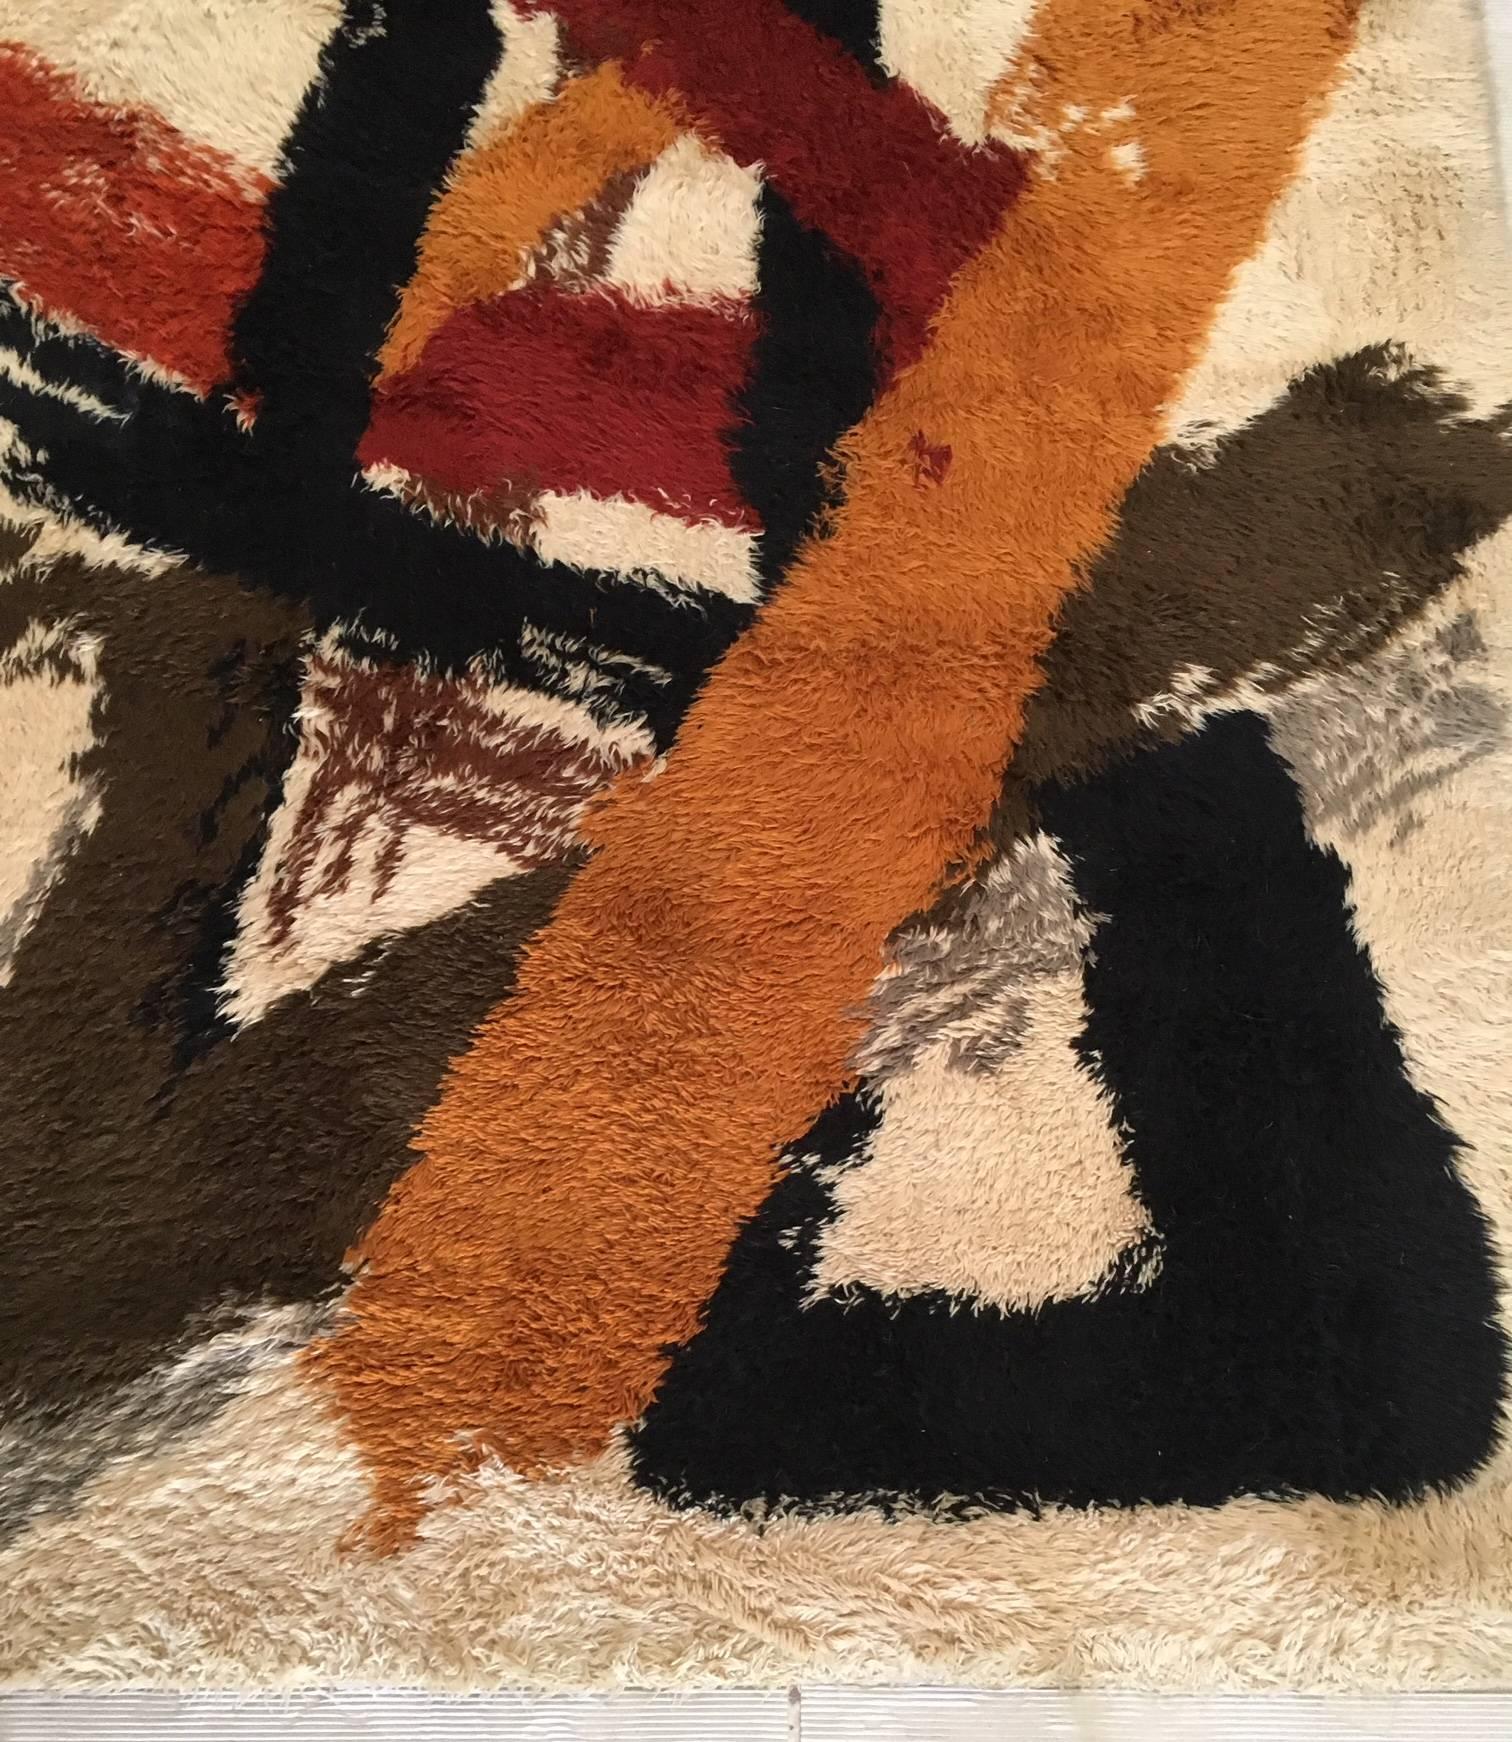 Mid-Century Modern Midcentury Abstract Iconic Carpet Manner of Artist Franz Kline For Sale